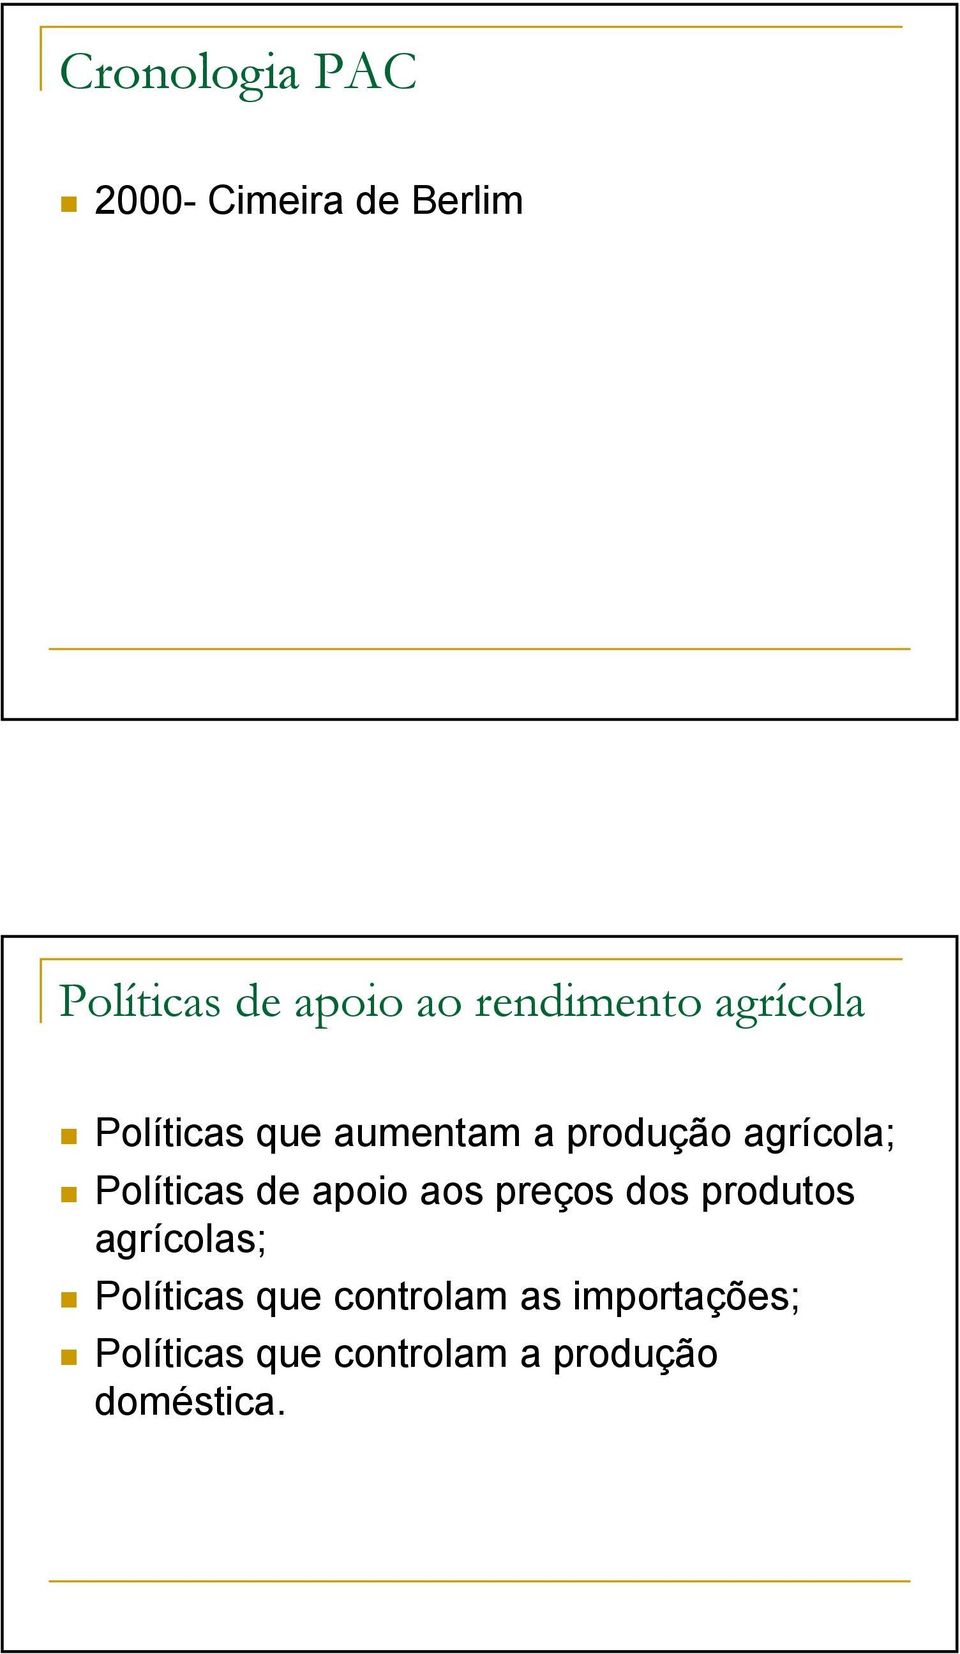 Políticas de apoio aos preços dos produtos agrícolas; Políticas